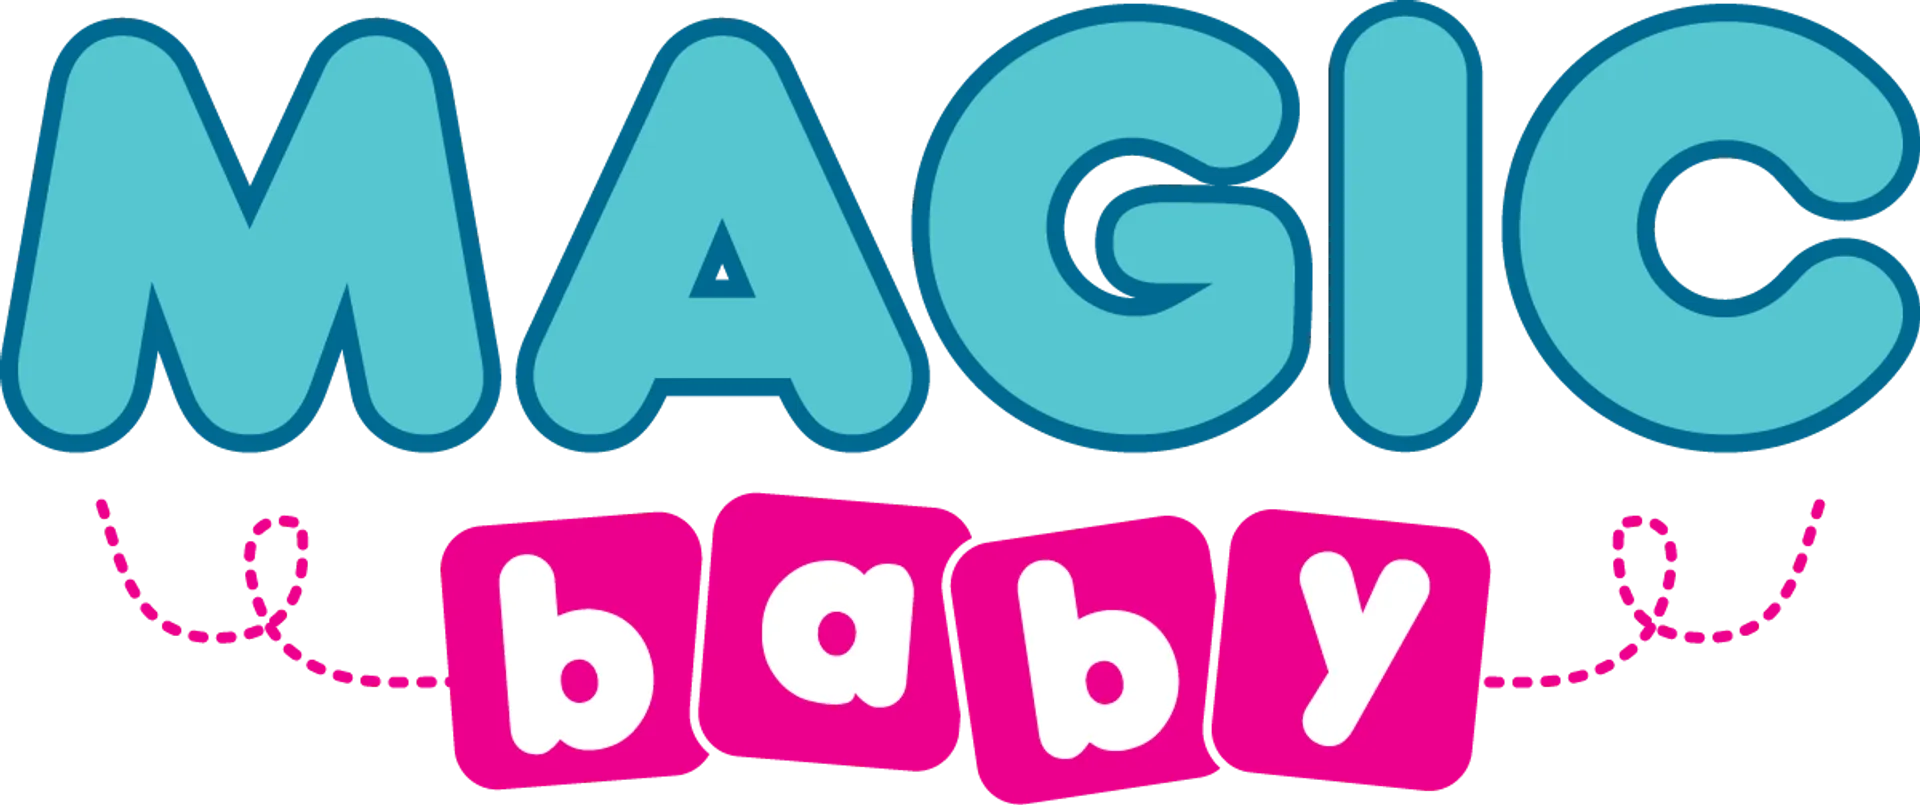 MAGIC BABY logo